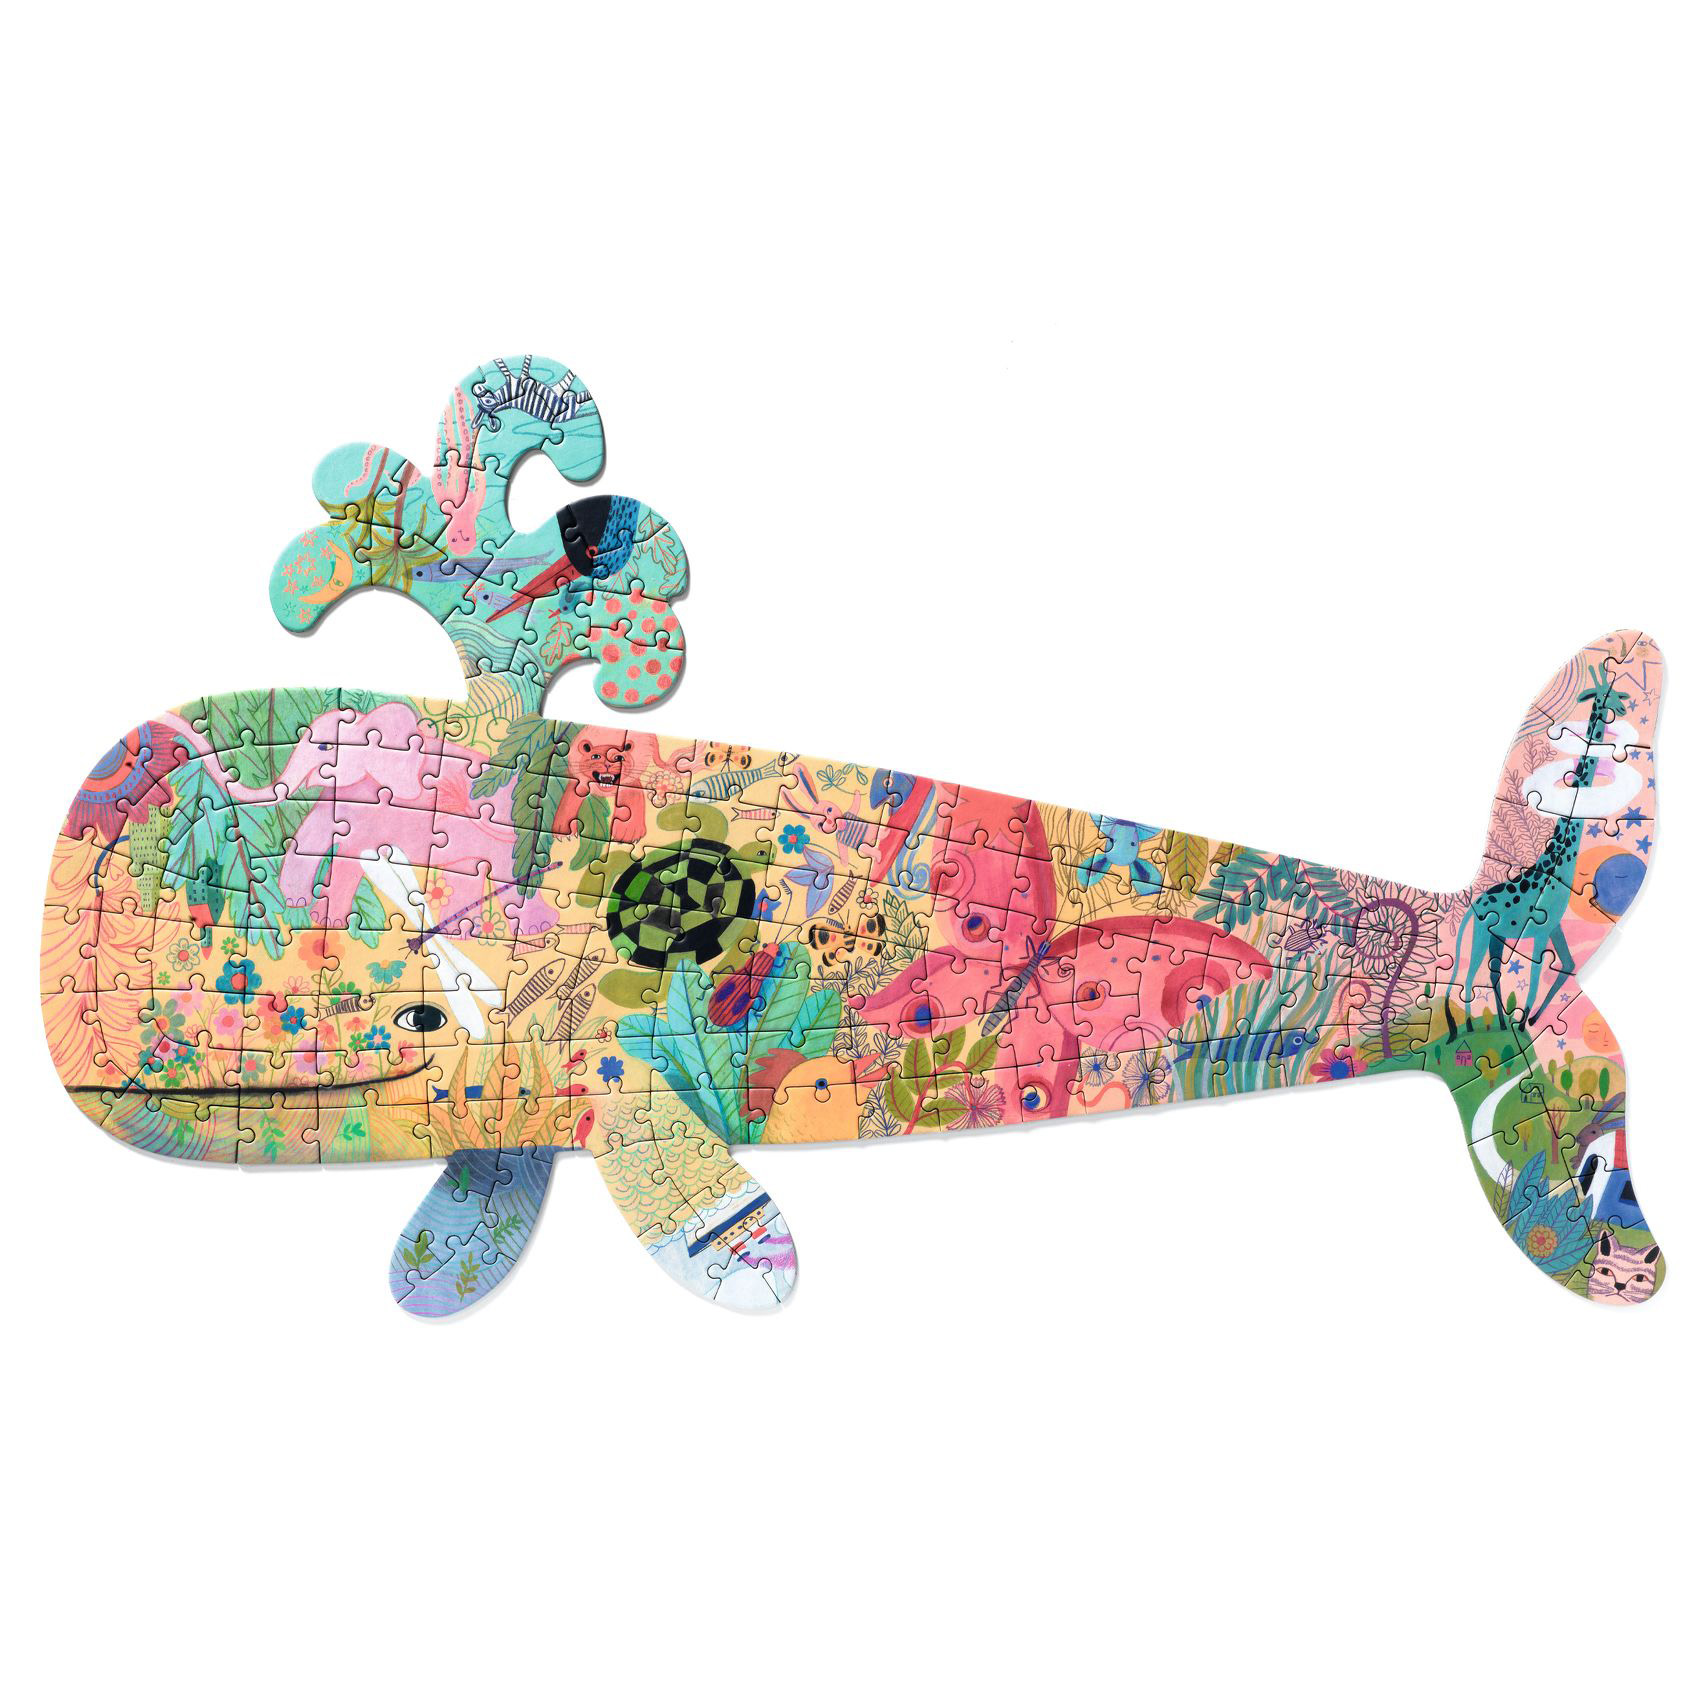 Puzzle Art Whale 150 pezzi - Djeco